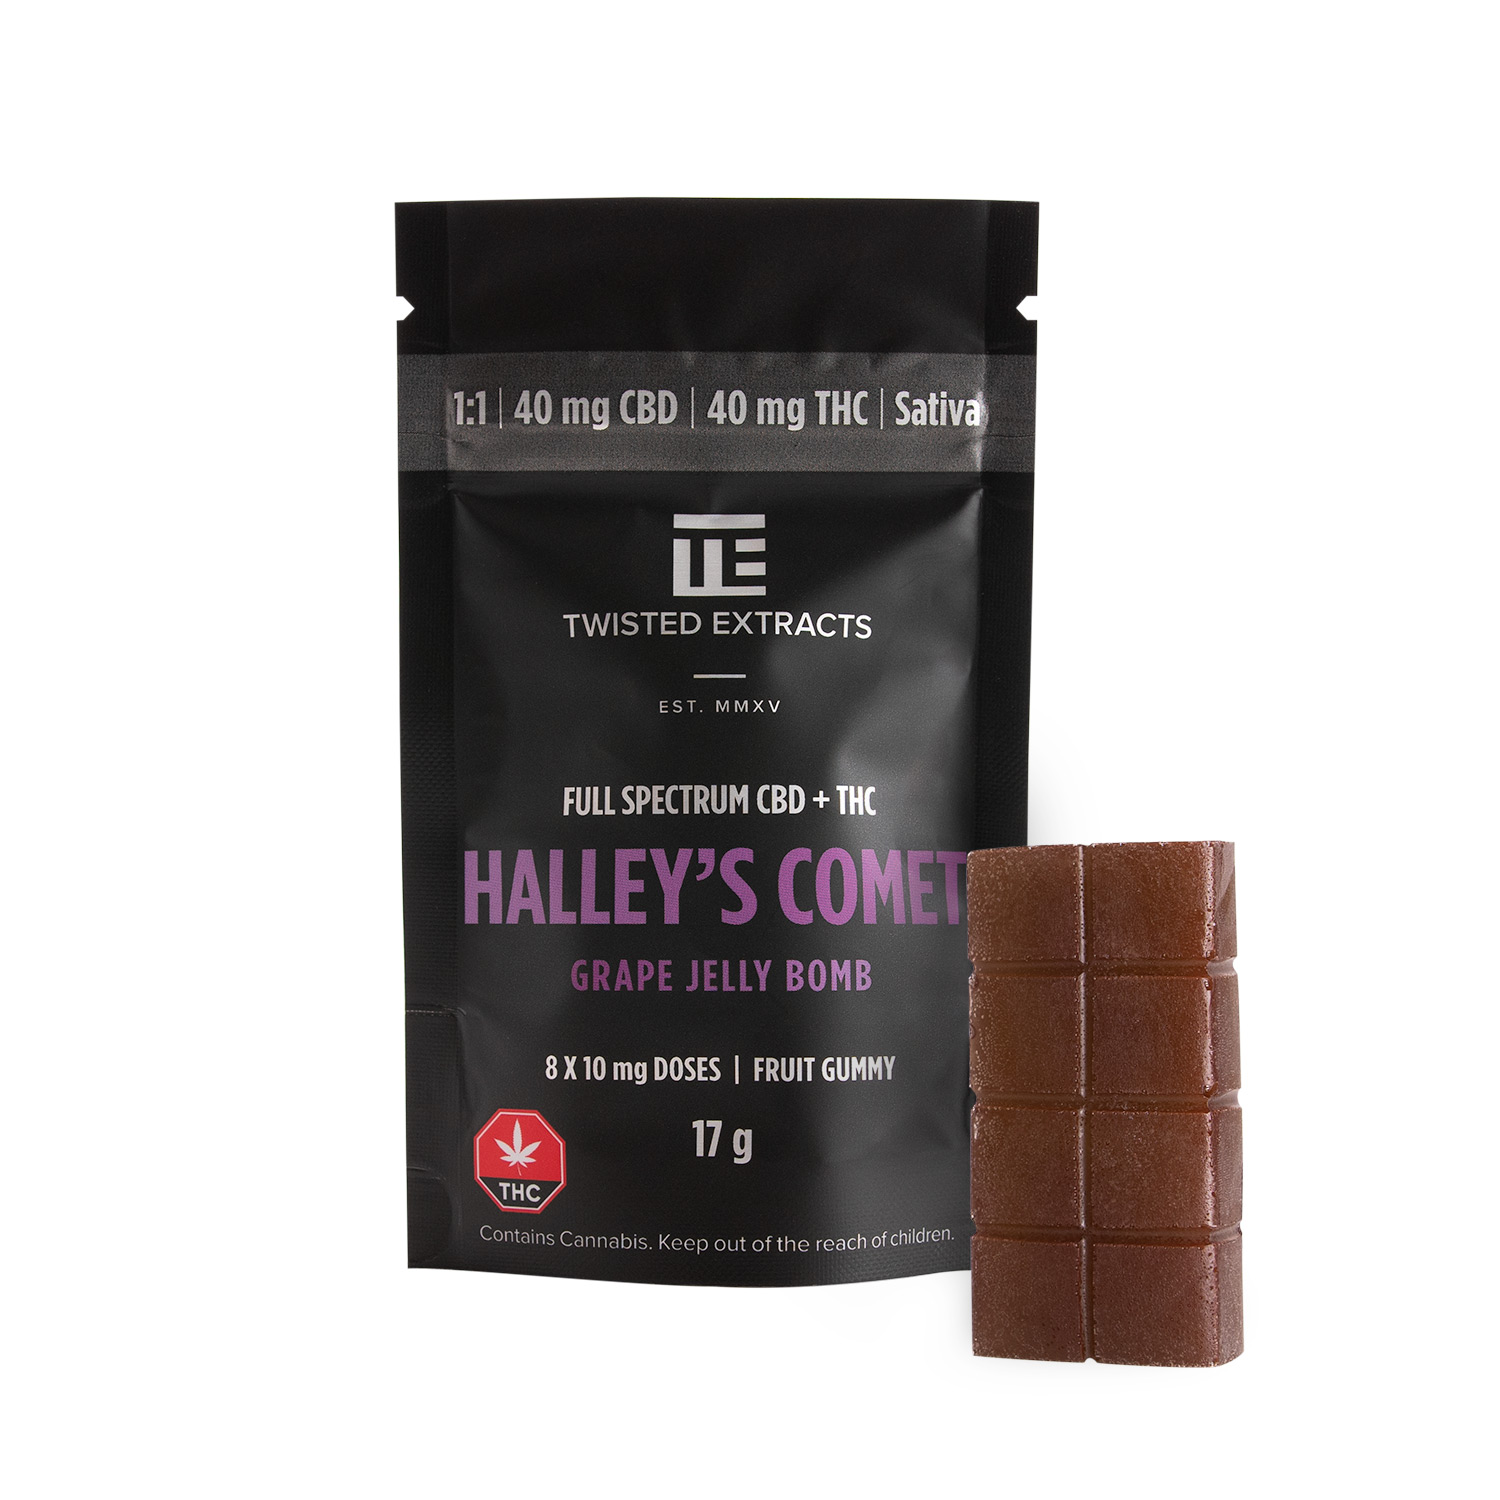 Hailey's Comet Grape